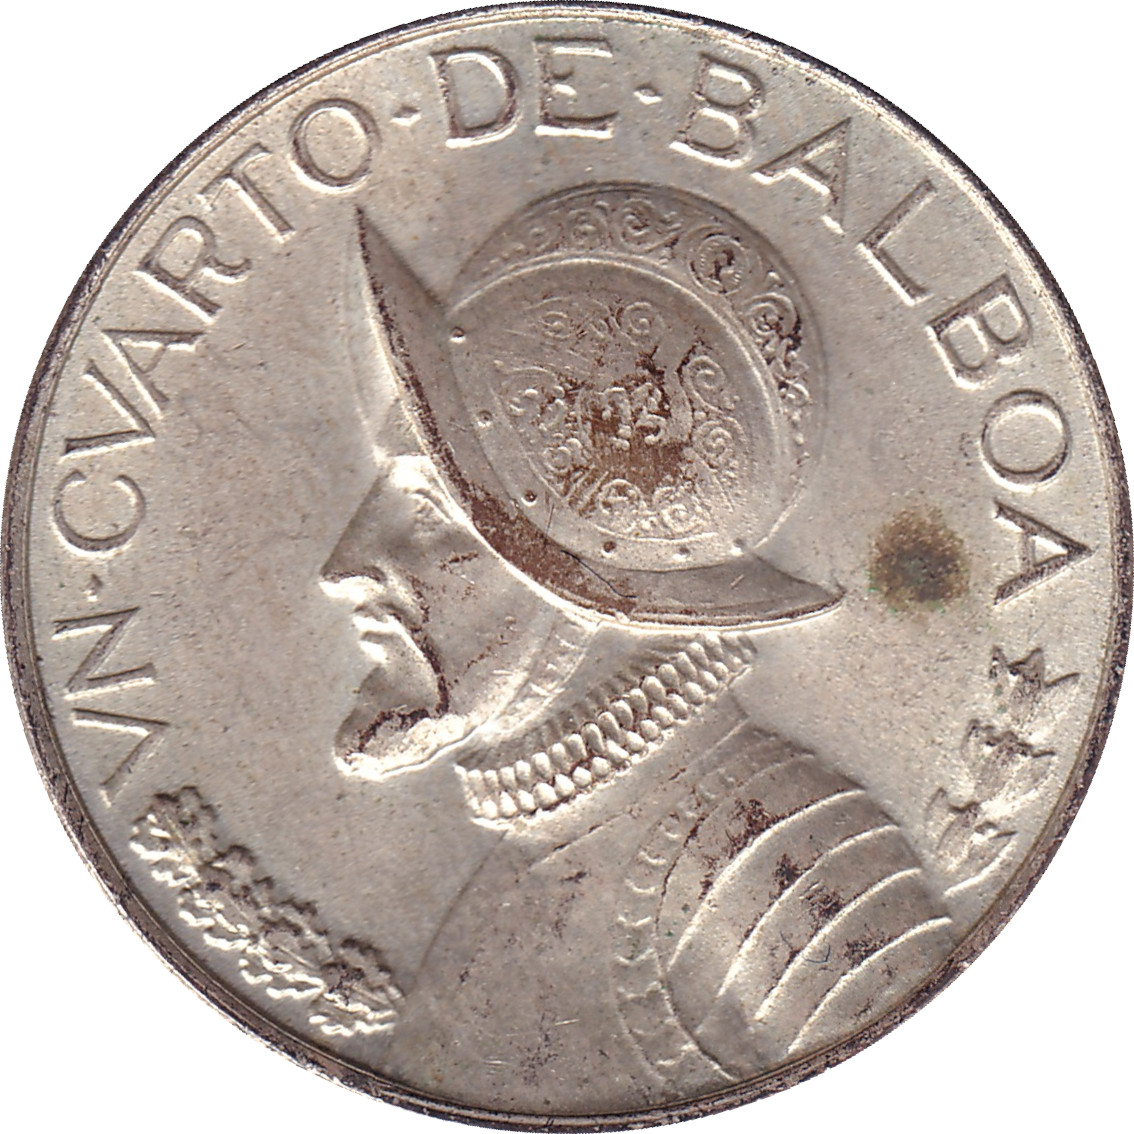 1/4 balboa - Balboa - Grand buste